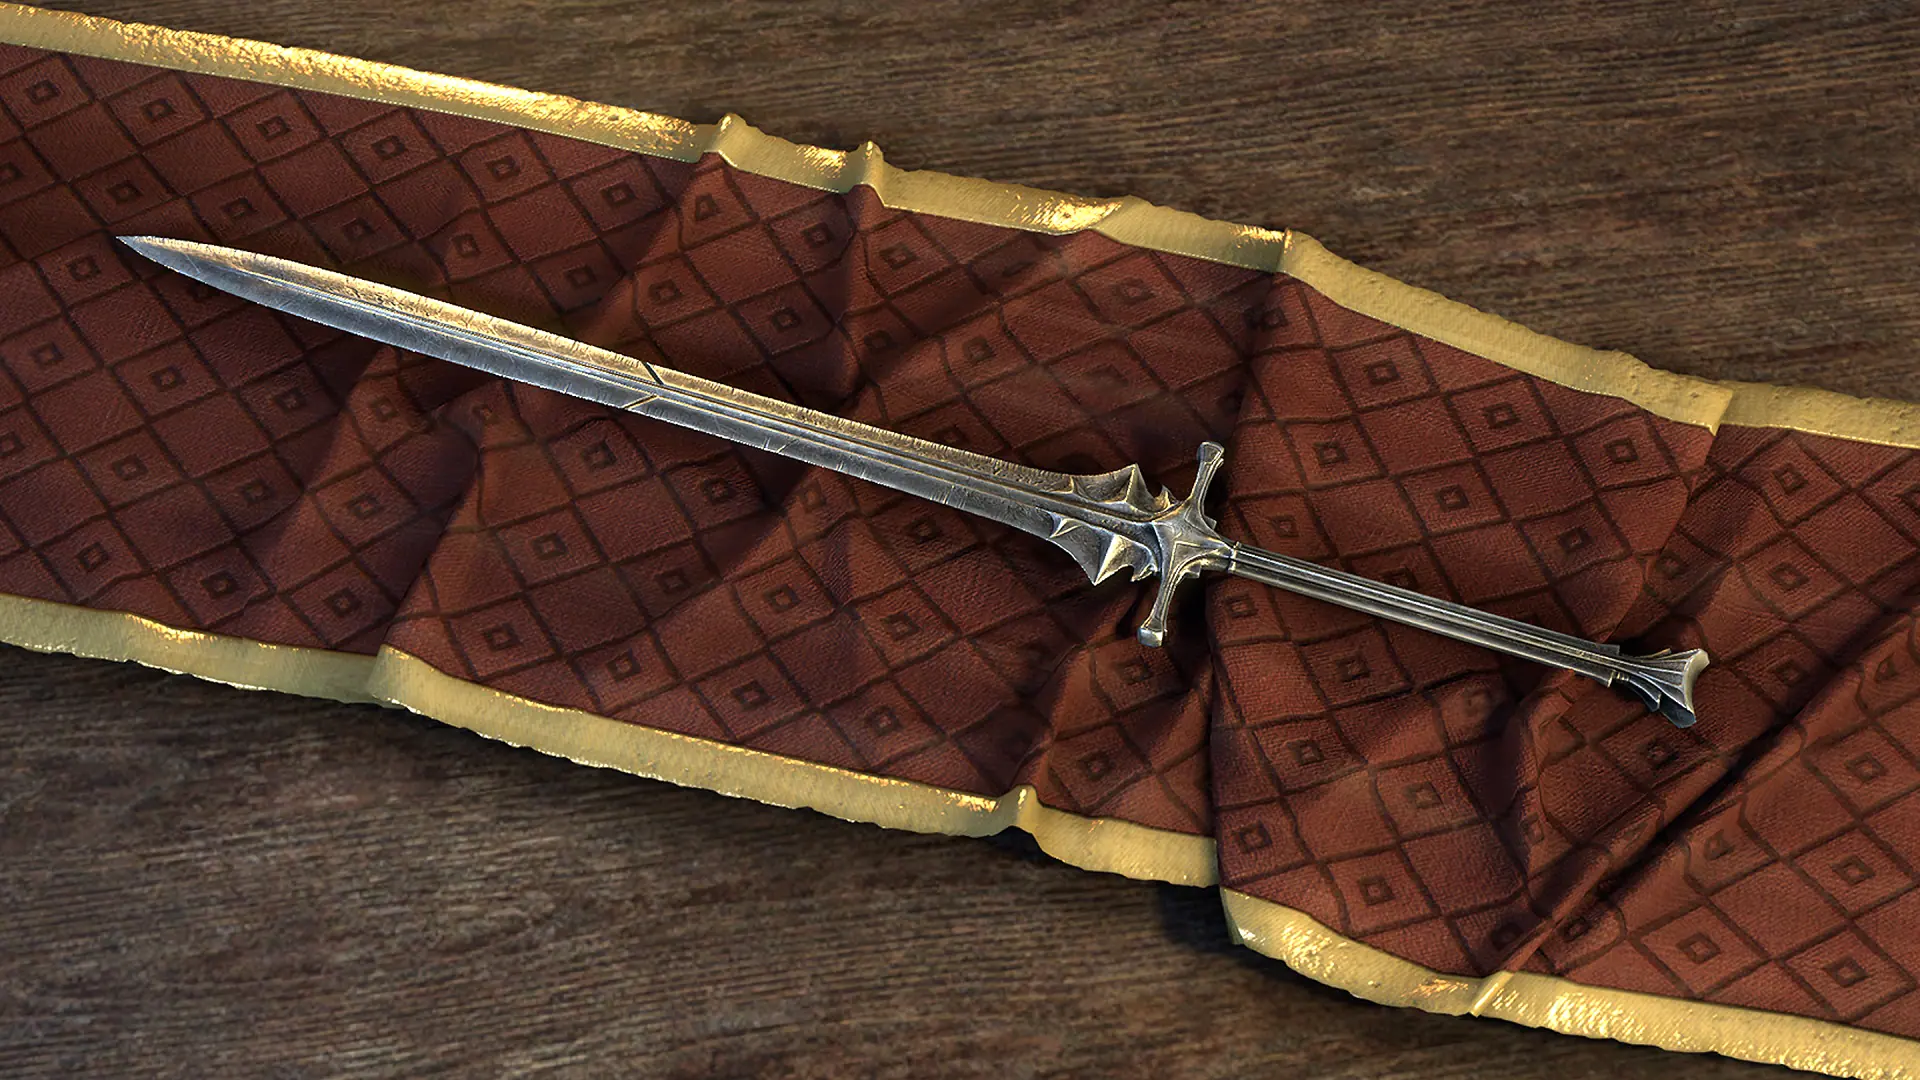 Sword of Jyggalag